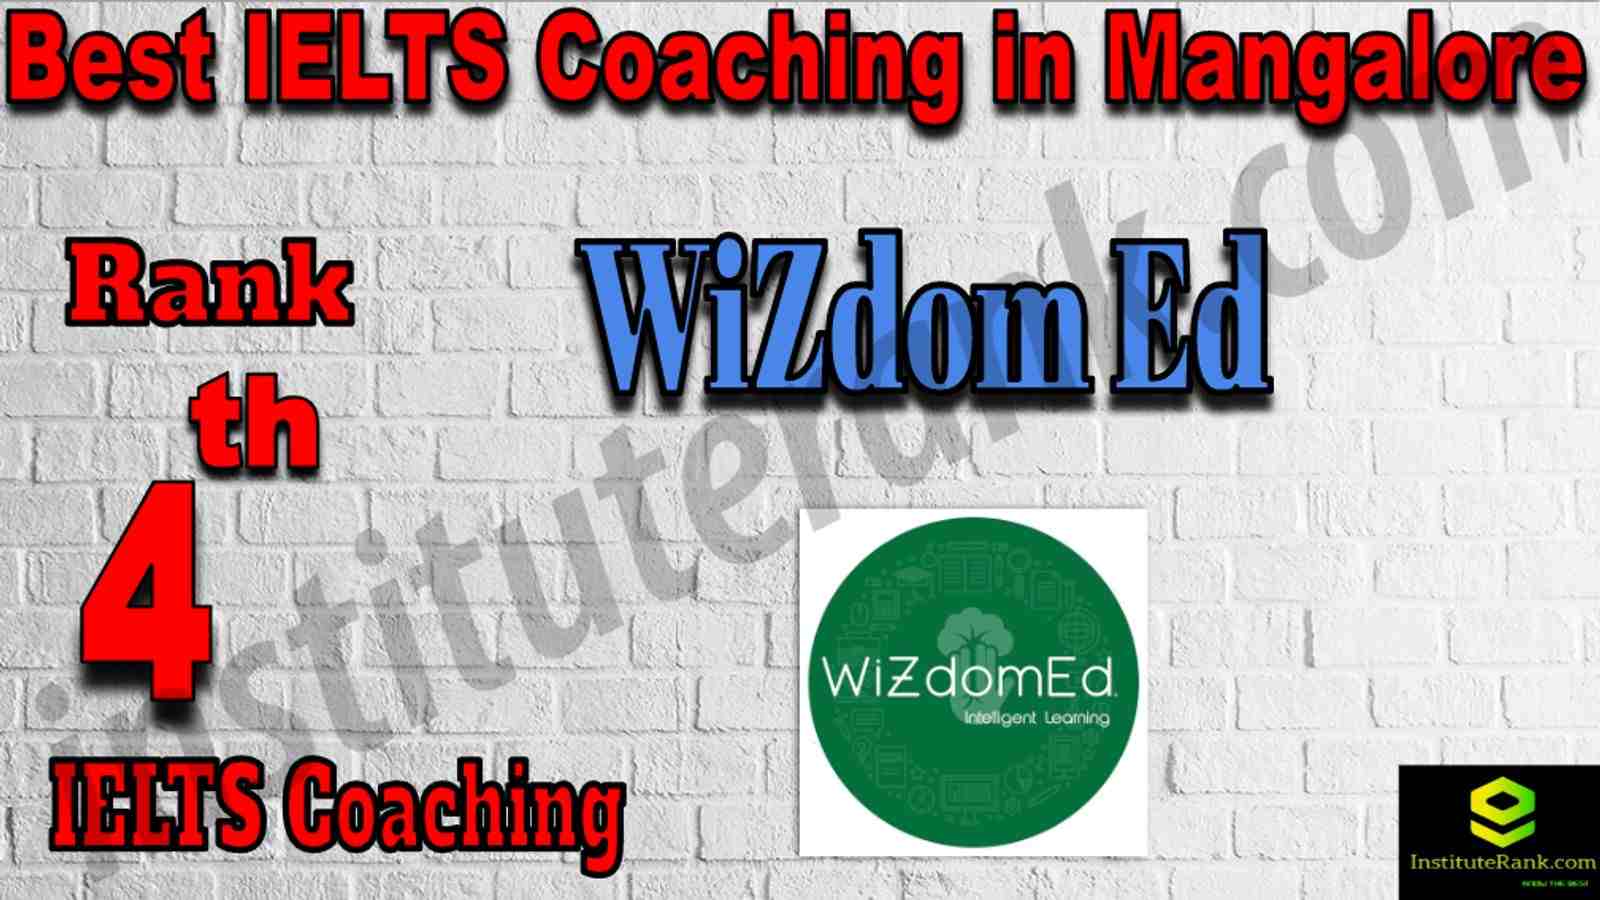 4th Best IELTS Coaching in Mangalore